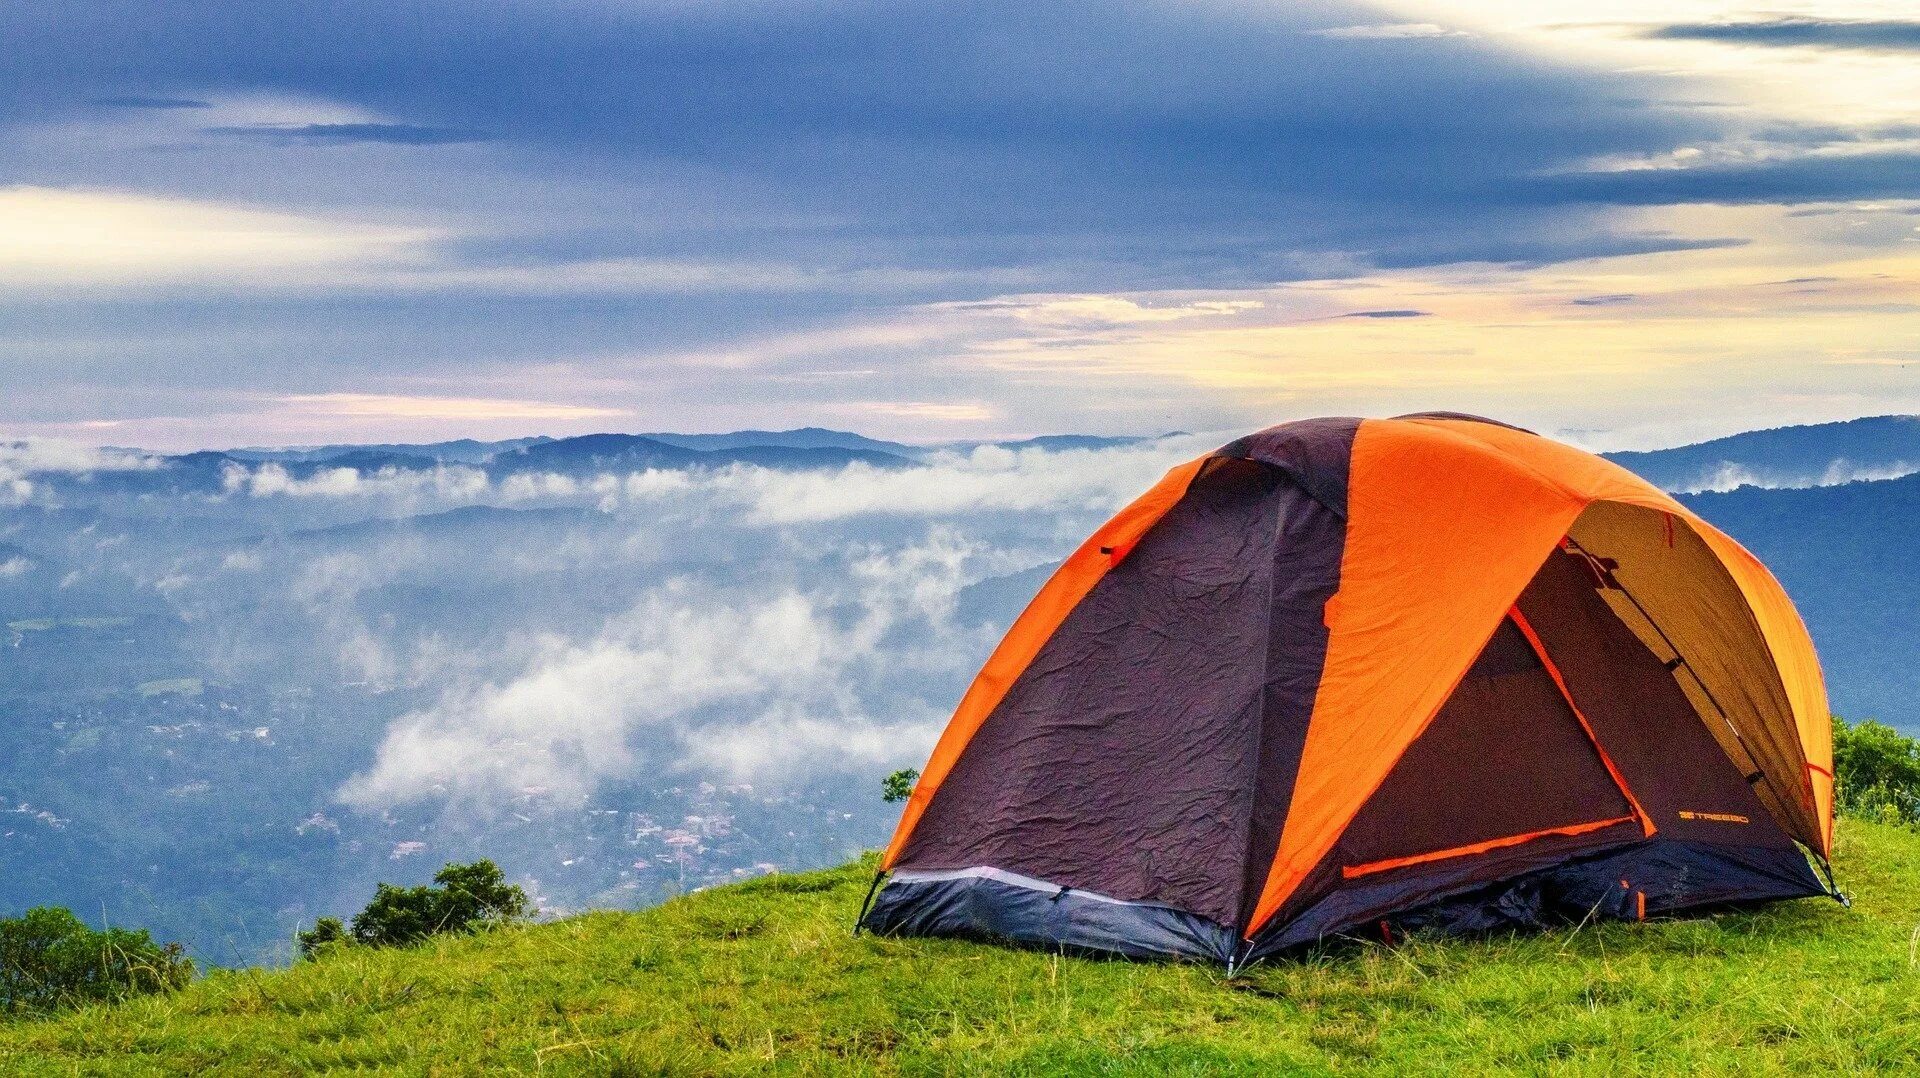 Палатка Camping Tent. Палатка Totem Summer 2 Plus. Миркампинг 2022 палатка. Палатка туристическая Outdoor Tent. Camping space